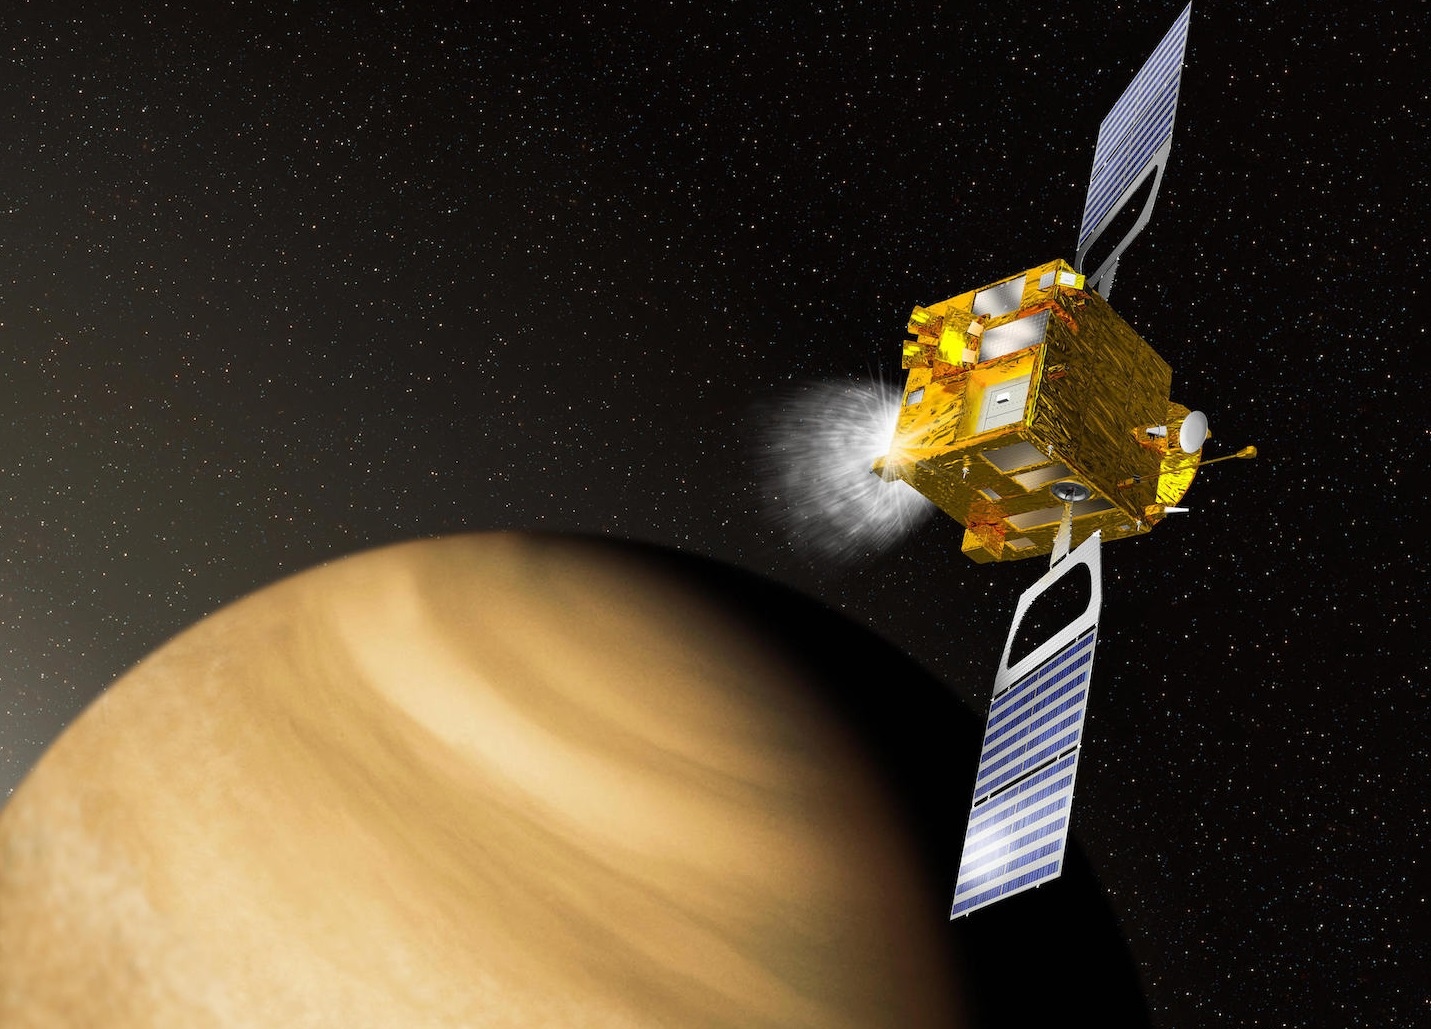 Scientists offer proof that Venus has active volcanoes that erupt